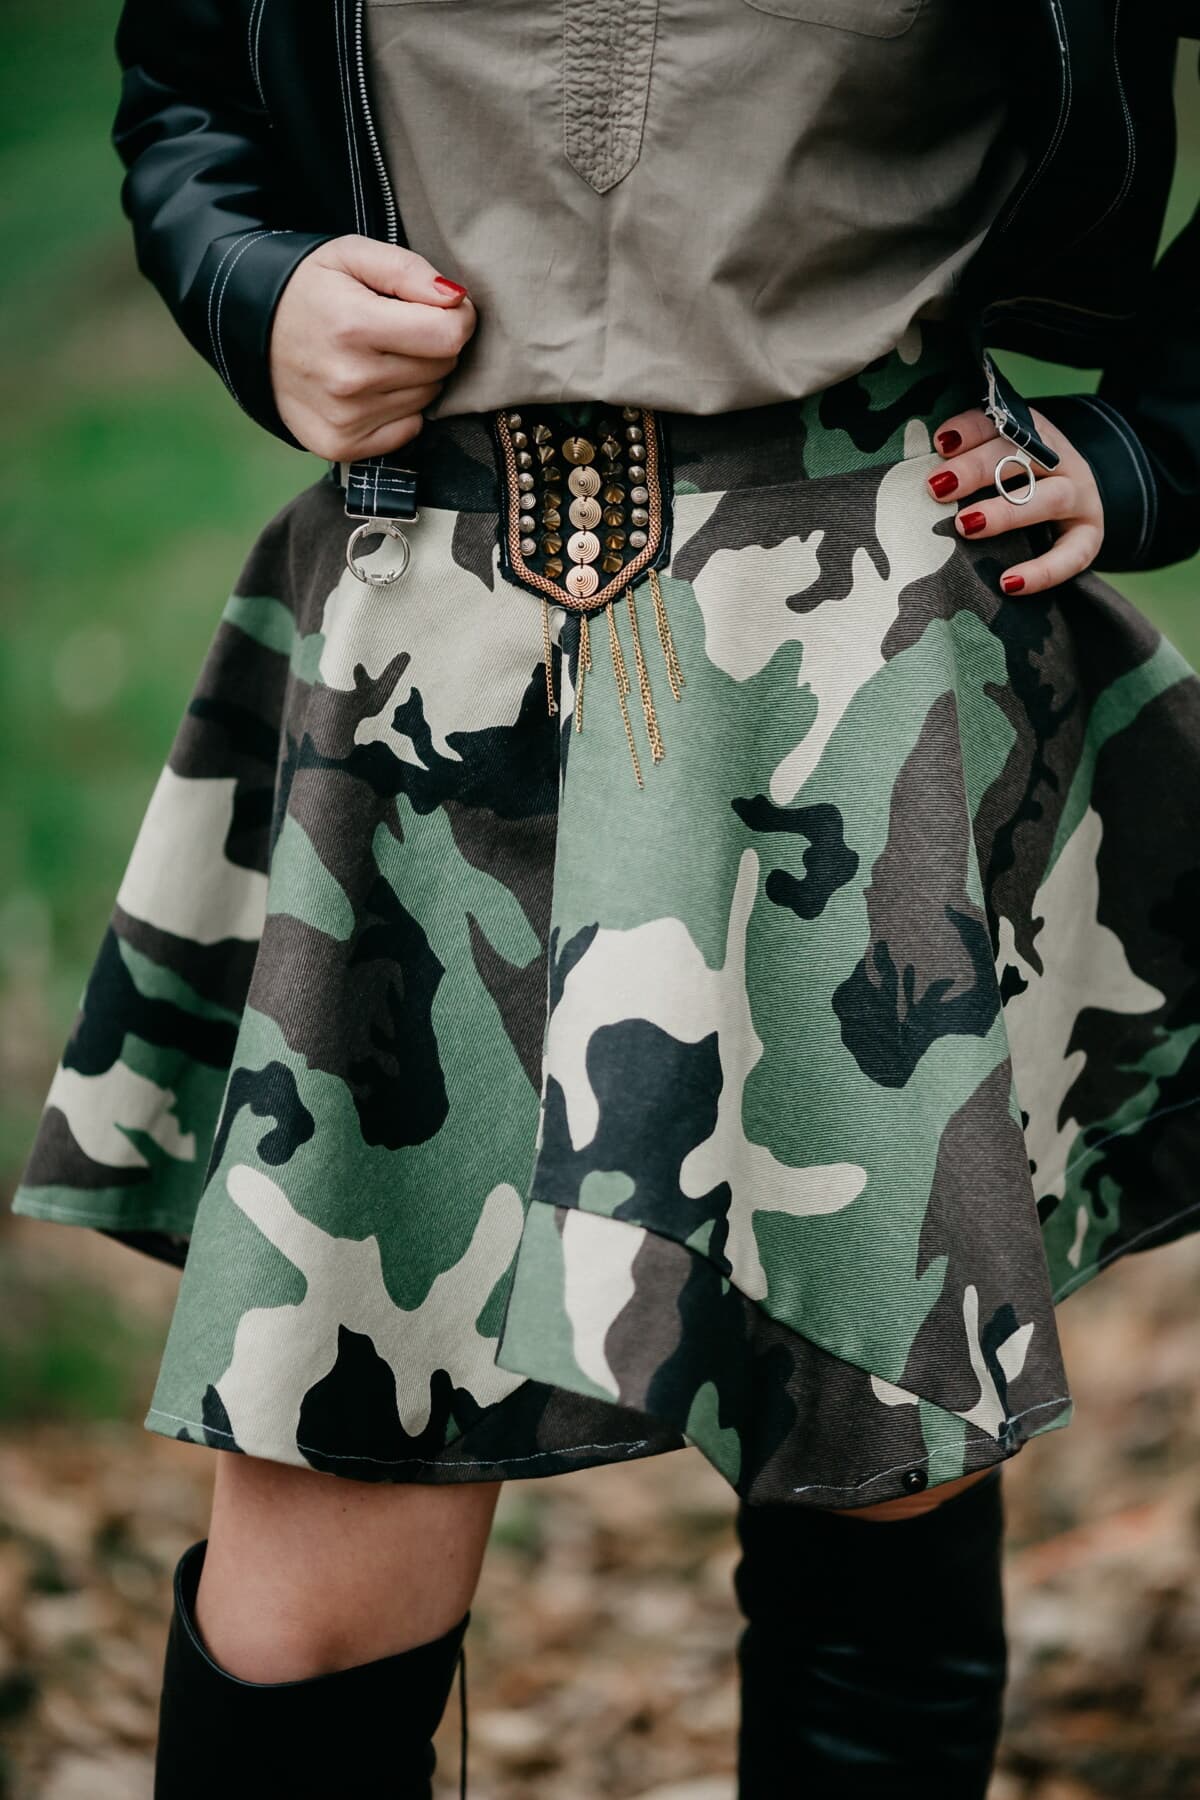 leger, ontwerp, rok, outfit, mode, camouflage, jonge vrouw, jas, leder, uniform